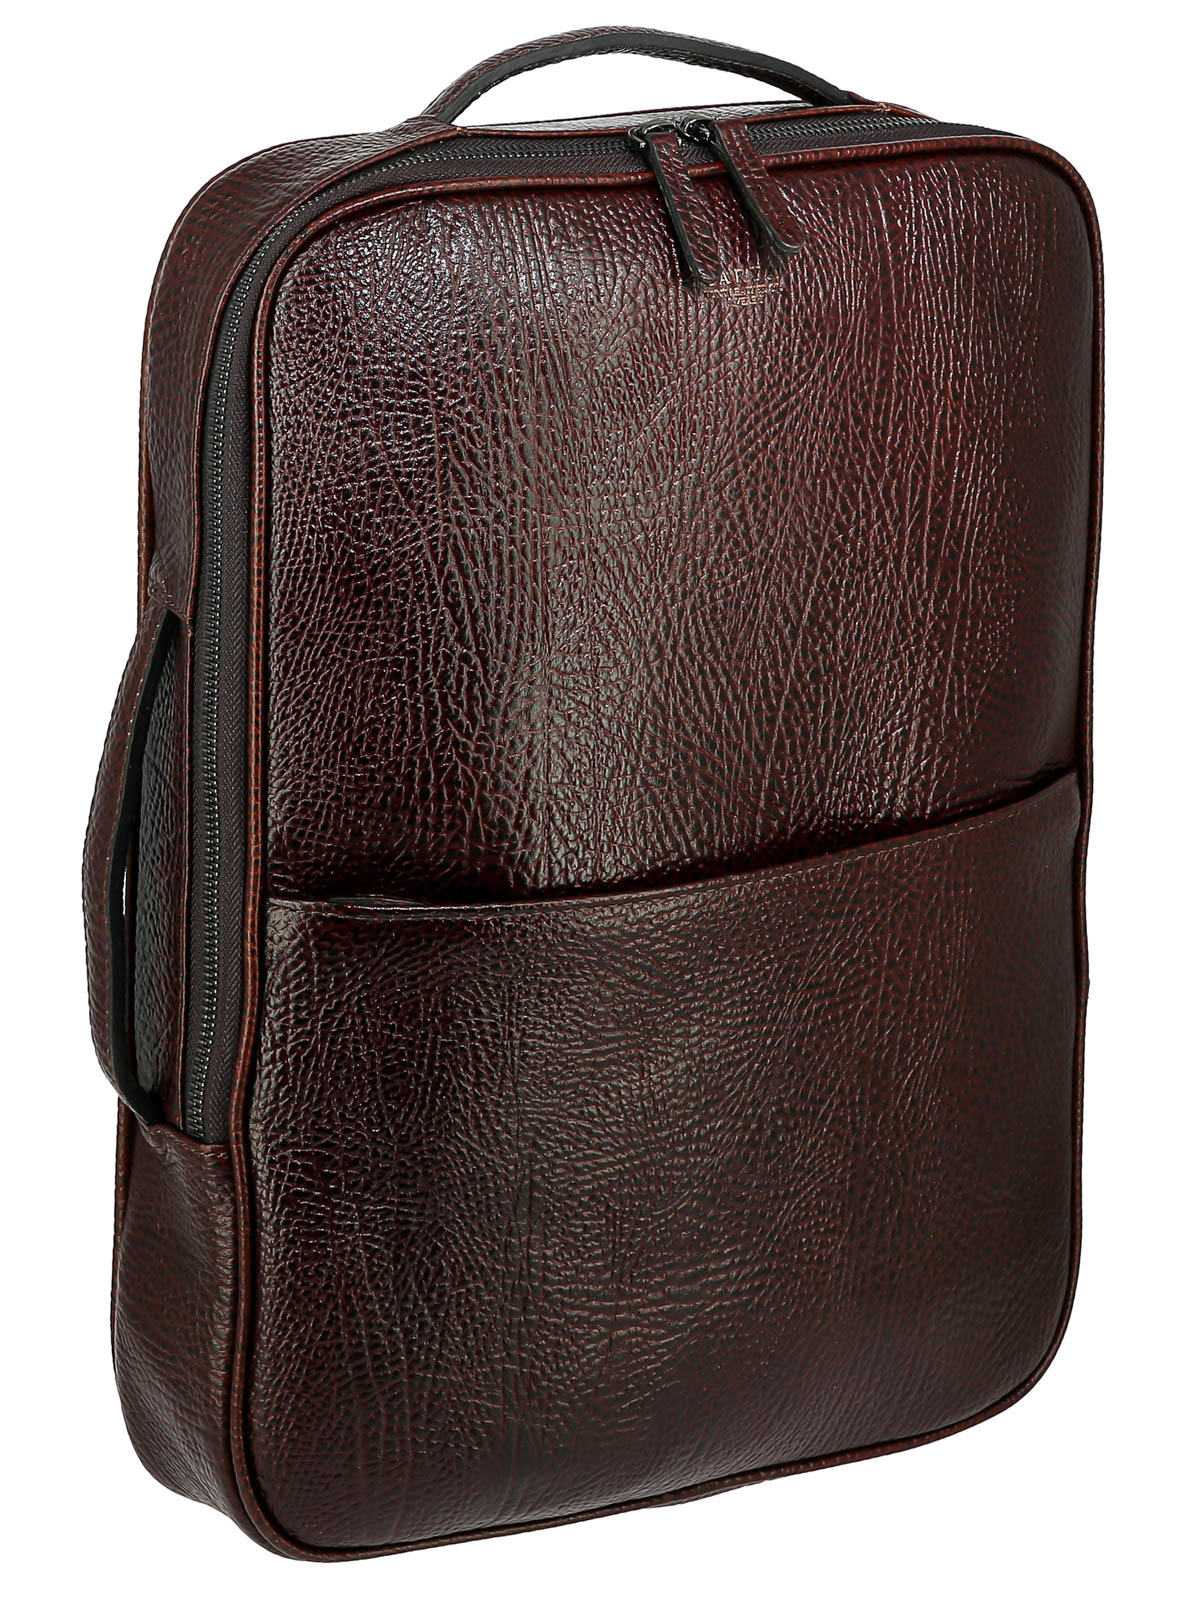 Рюкзак мужской Karya 0892K коричневый/рельефный, 40х30х7 см